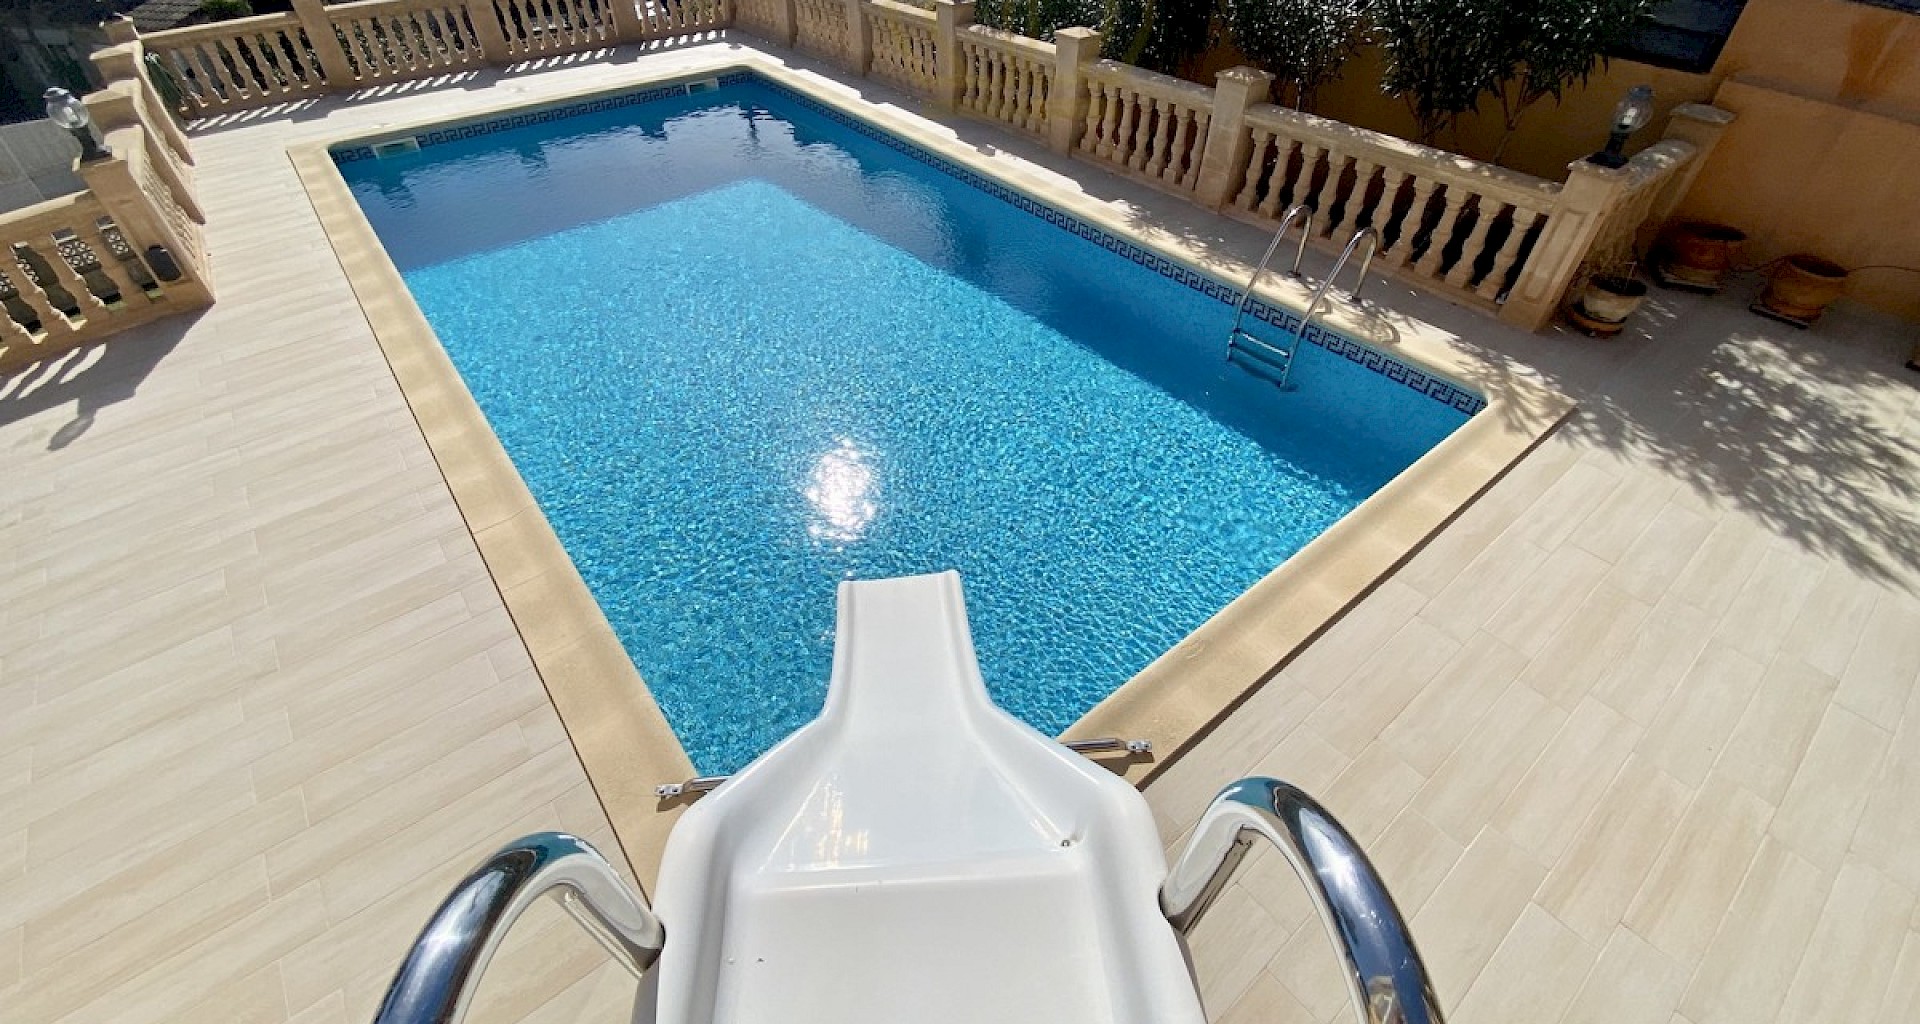 KROHN & LUEDEMANN Mediterranes Haus mit Pool in Costa de la Calma 